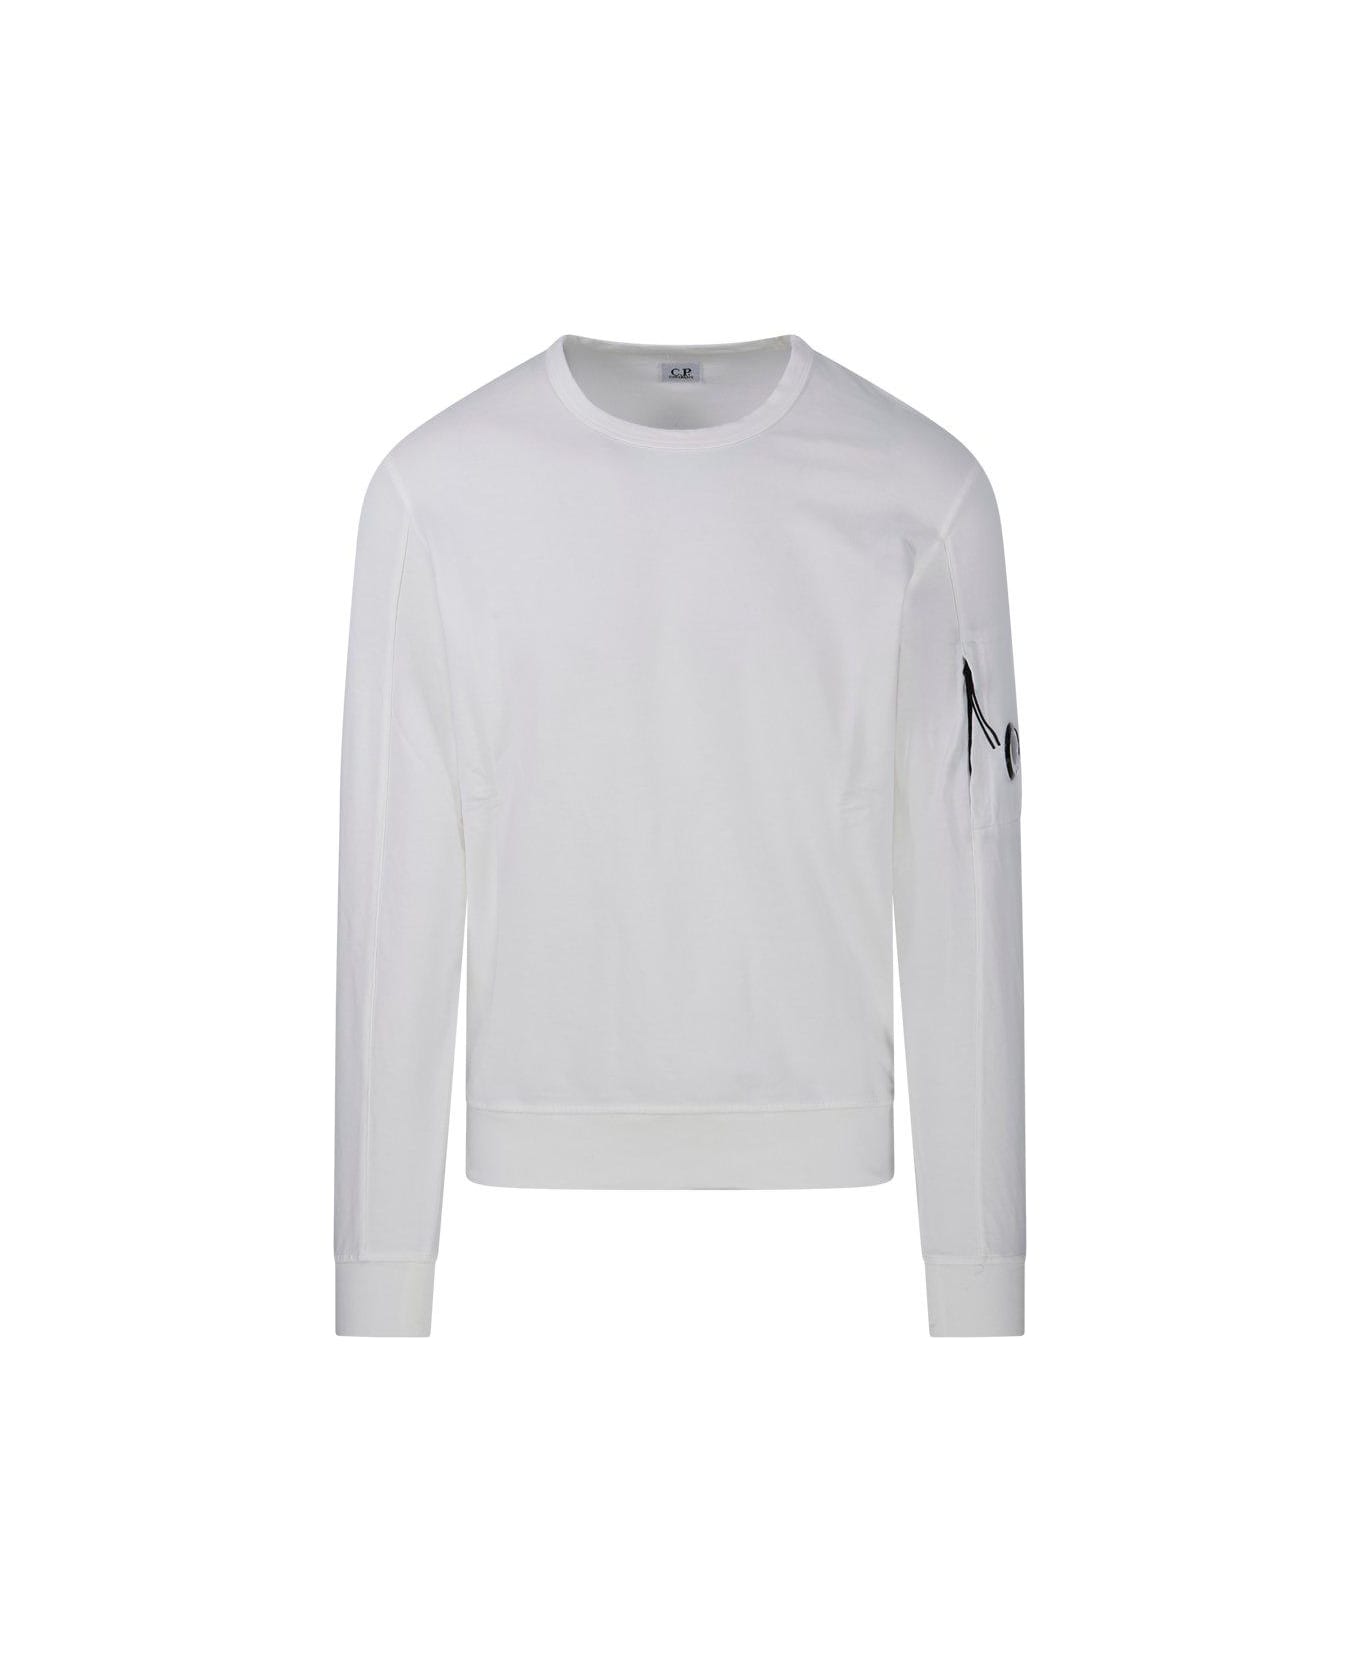 C.P. Company Lens-detailed Crewneck Sweatshirt - Gauze white